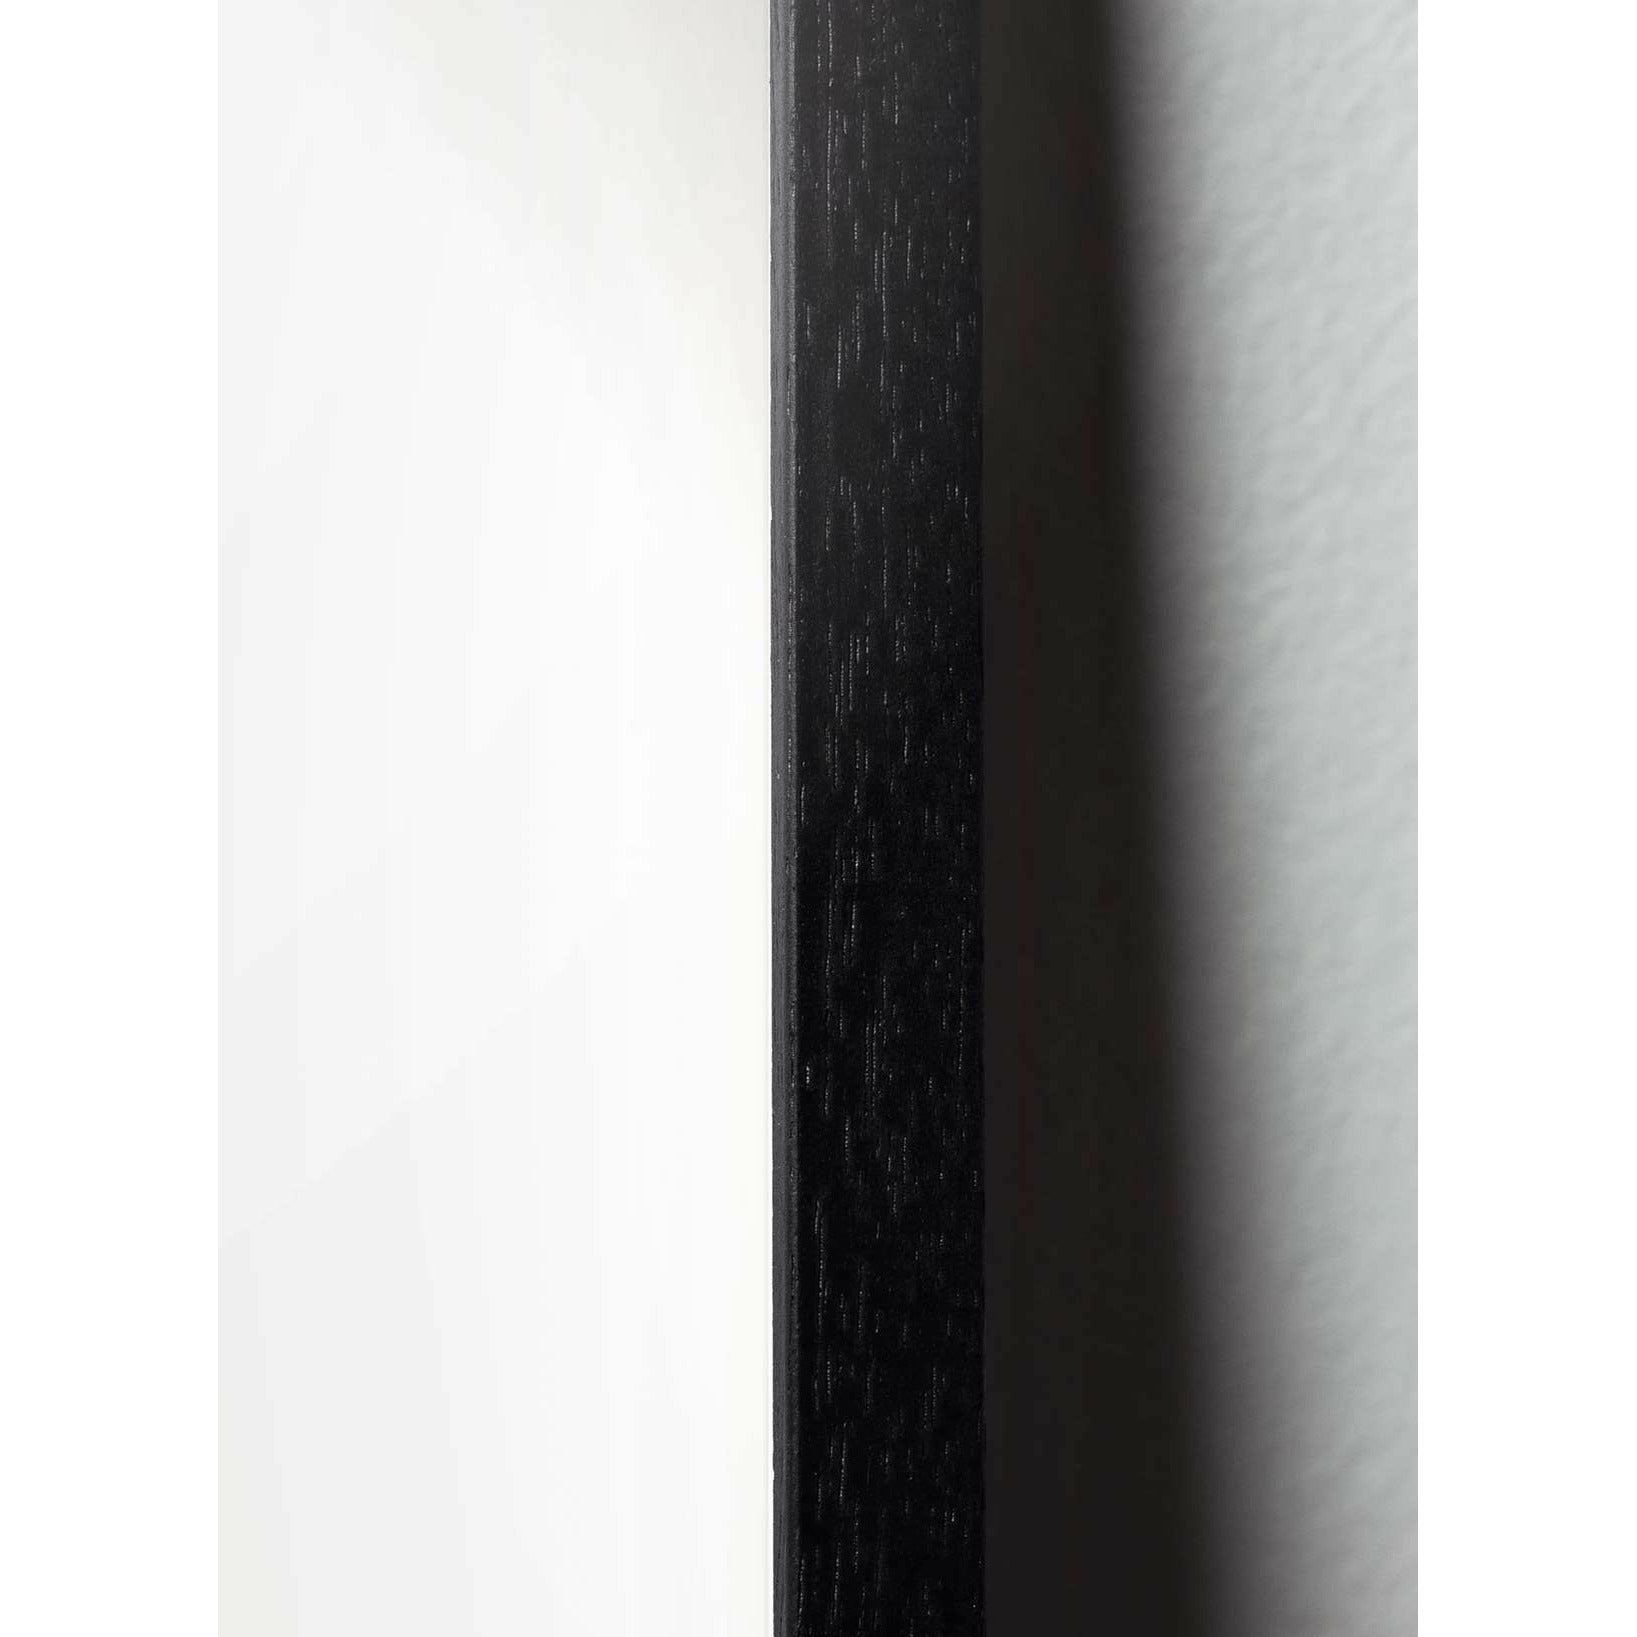 Brainchild Egg Line Poster, Frame In Black Lacquered Wood 30x40 Cm, White Background